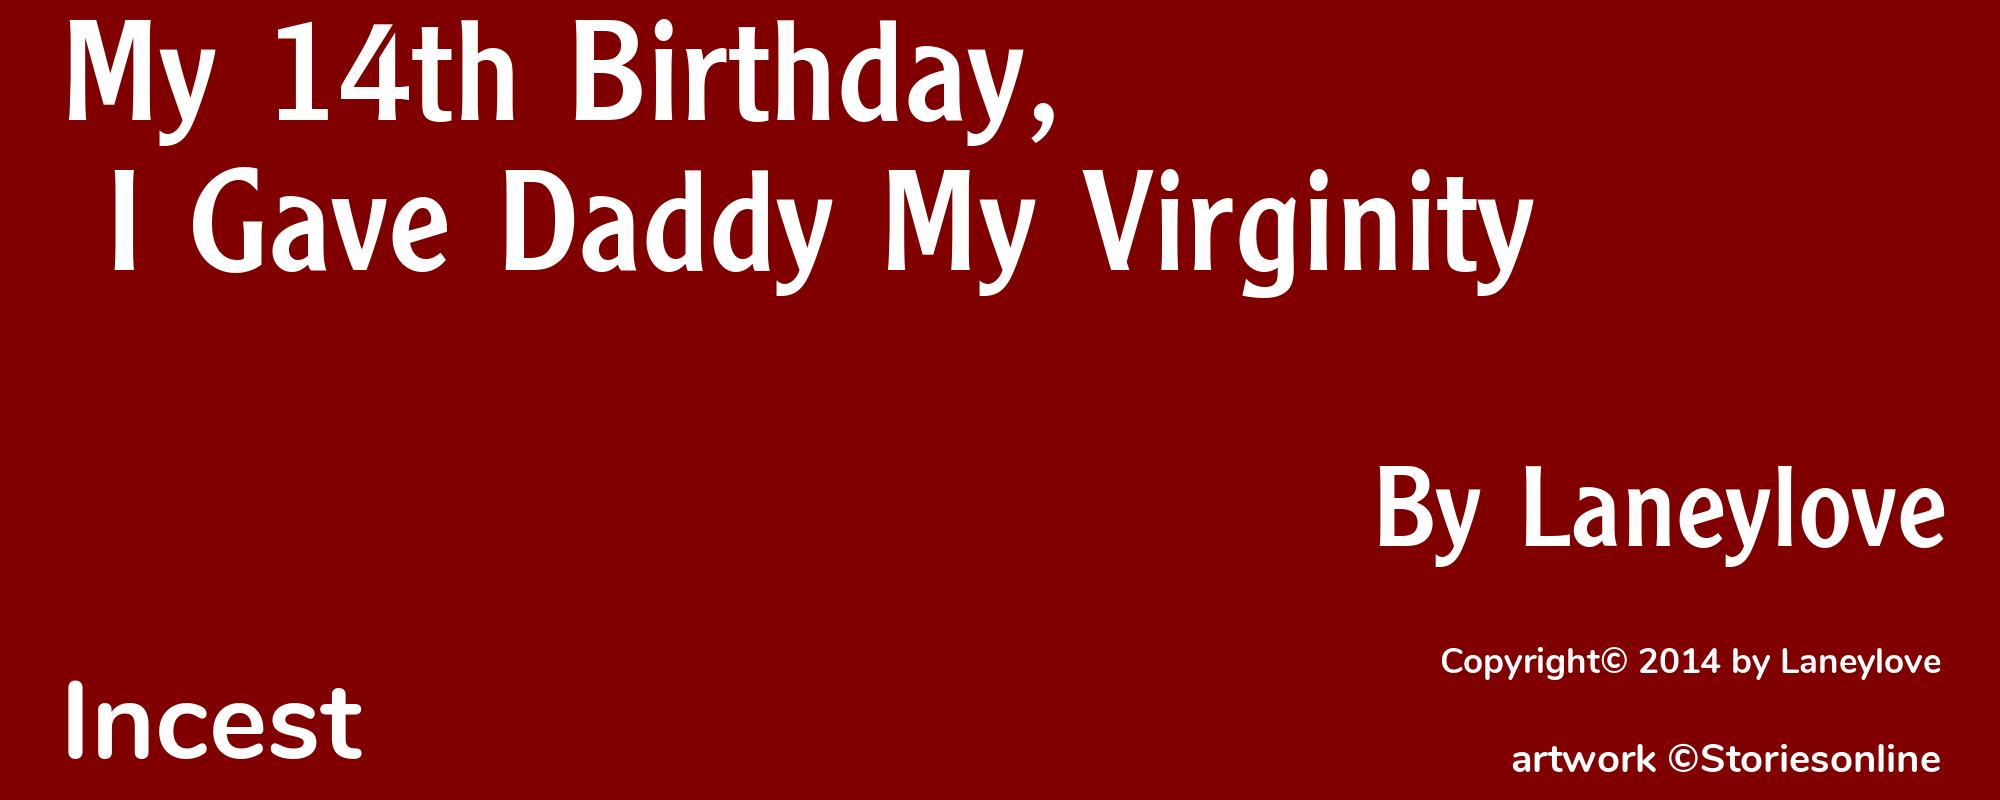 My 14th Birthday, I Gave Daddy My Virginity - Cover